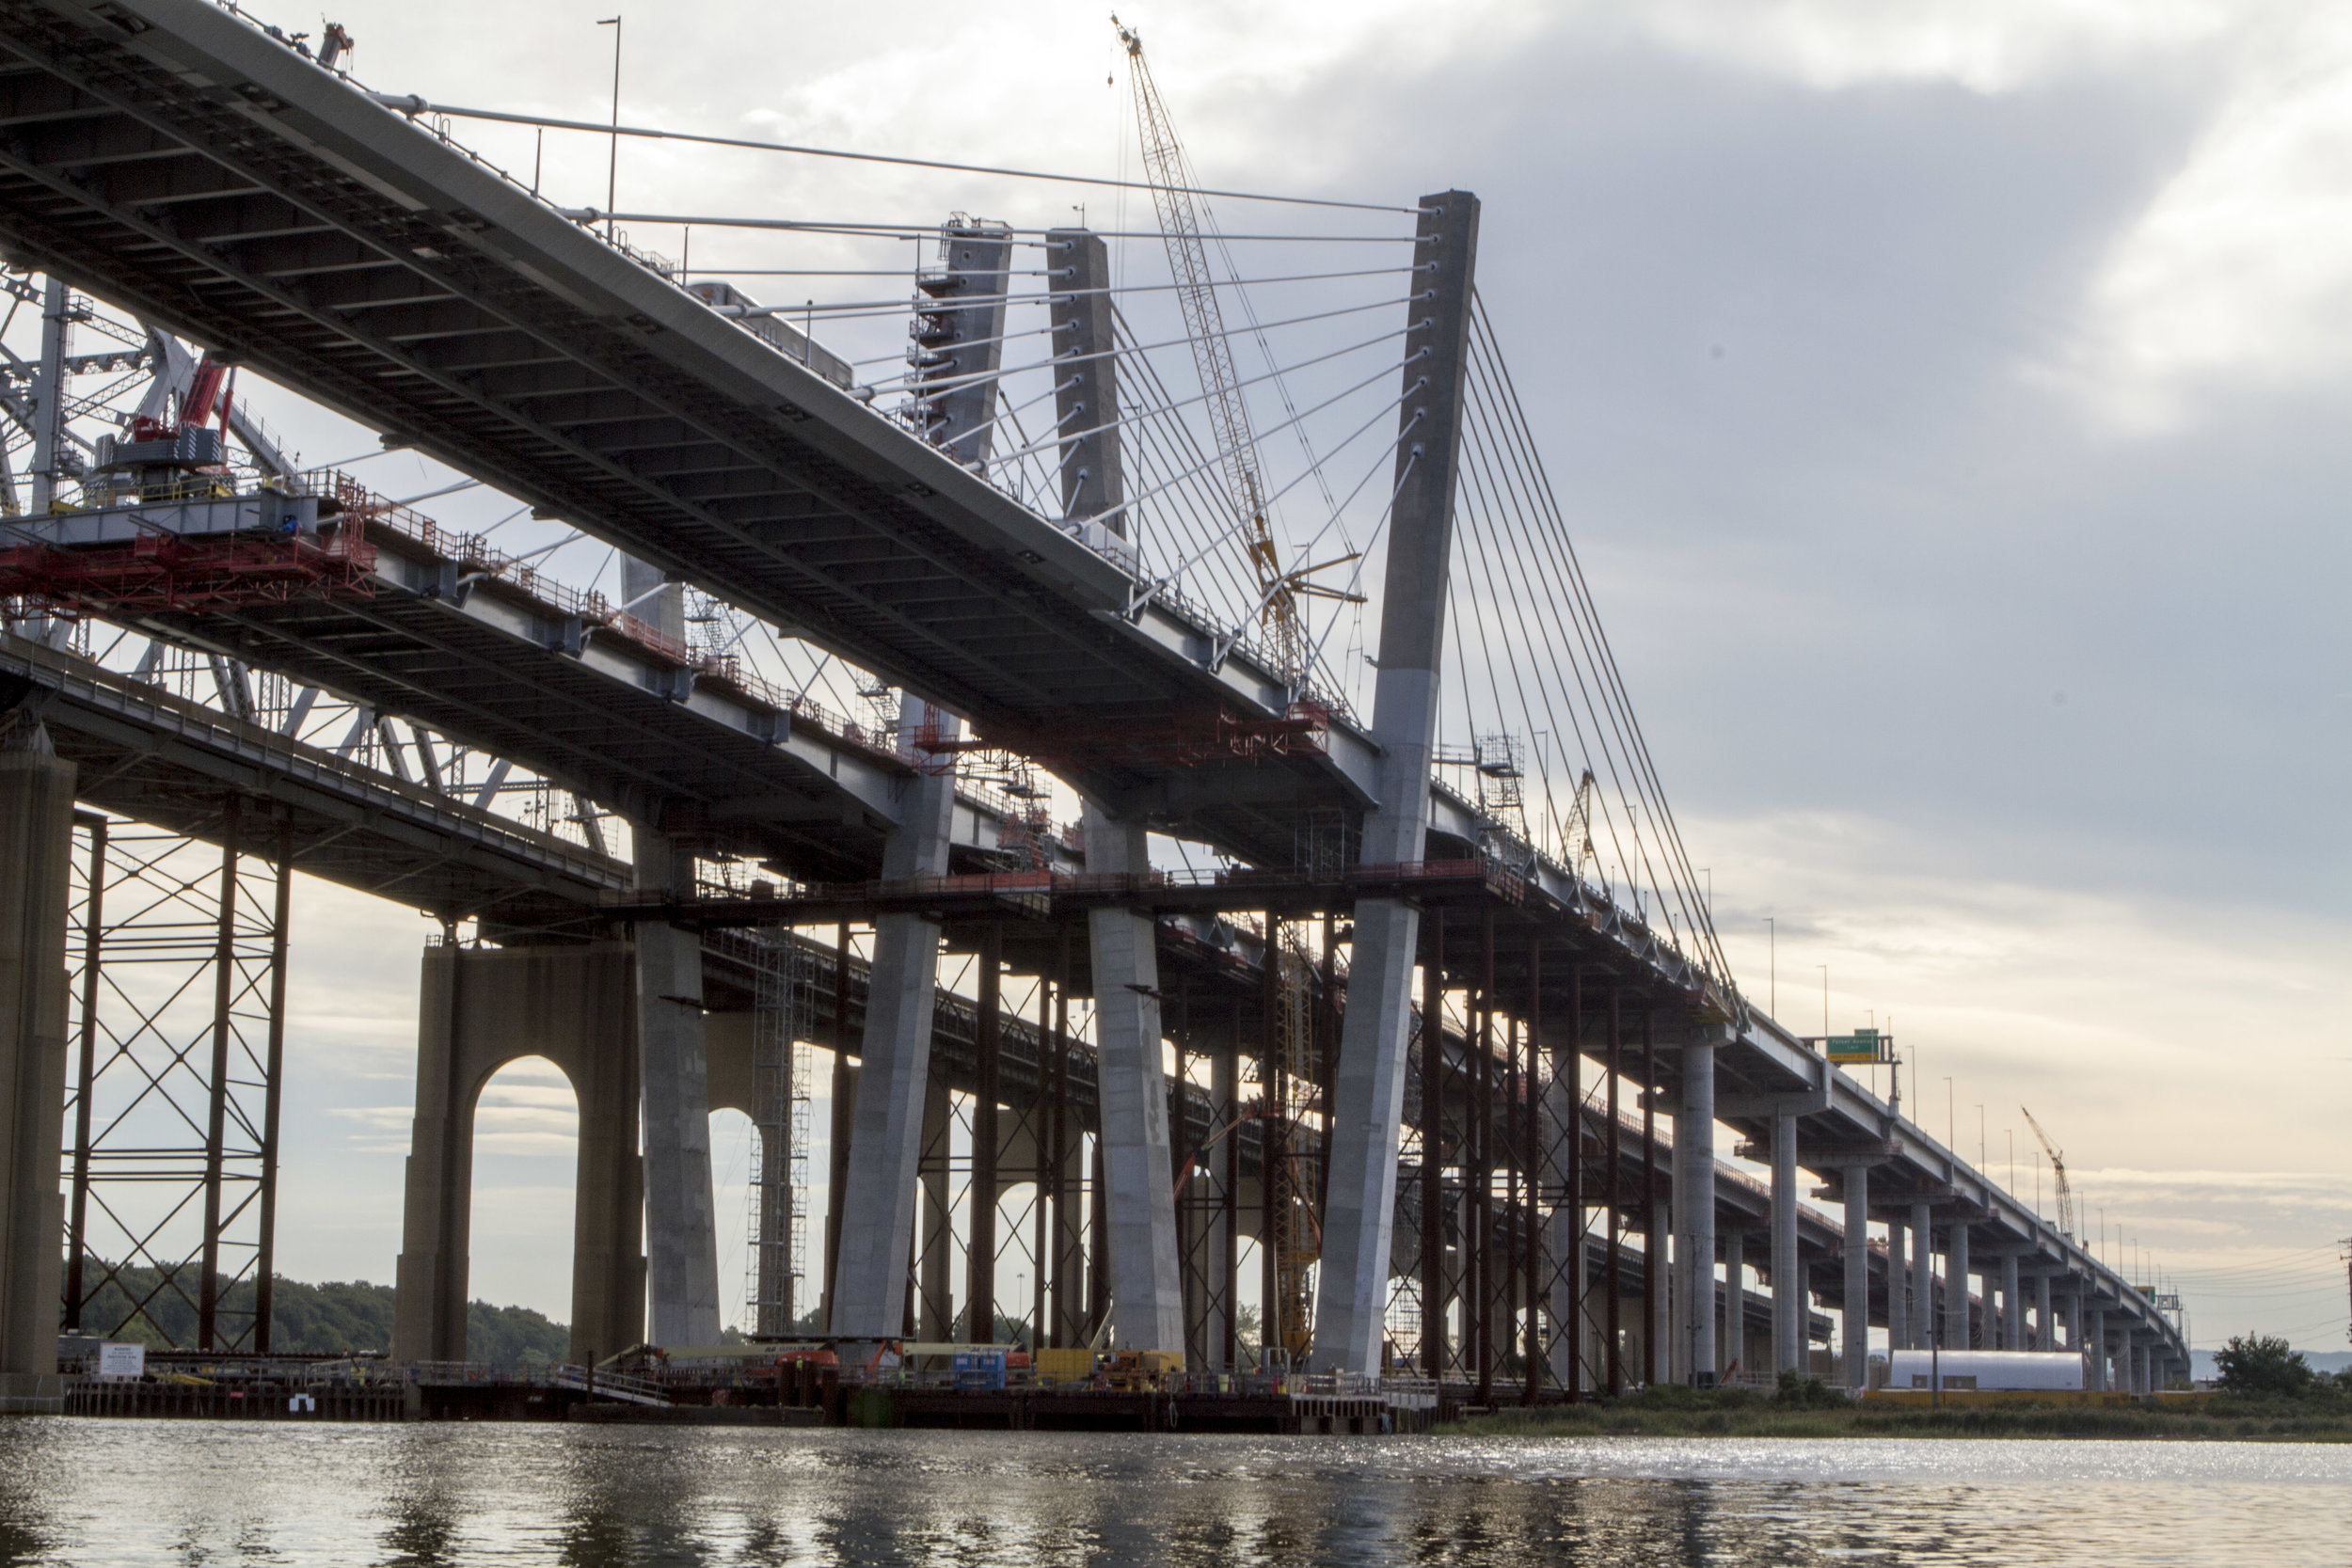 Goethals Bridge Modernization Program